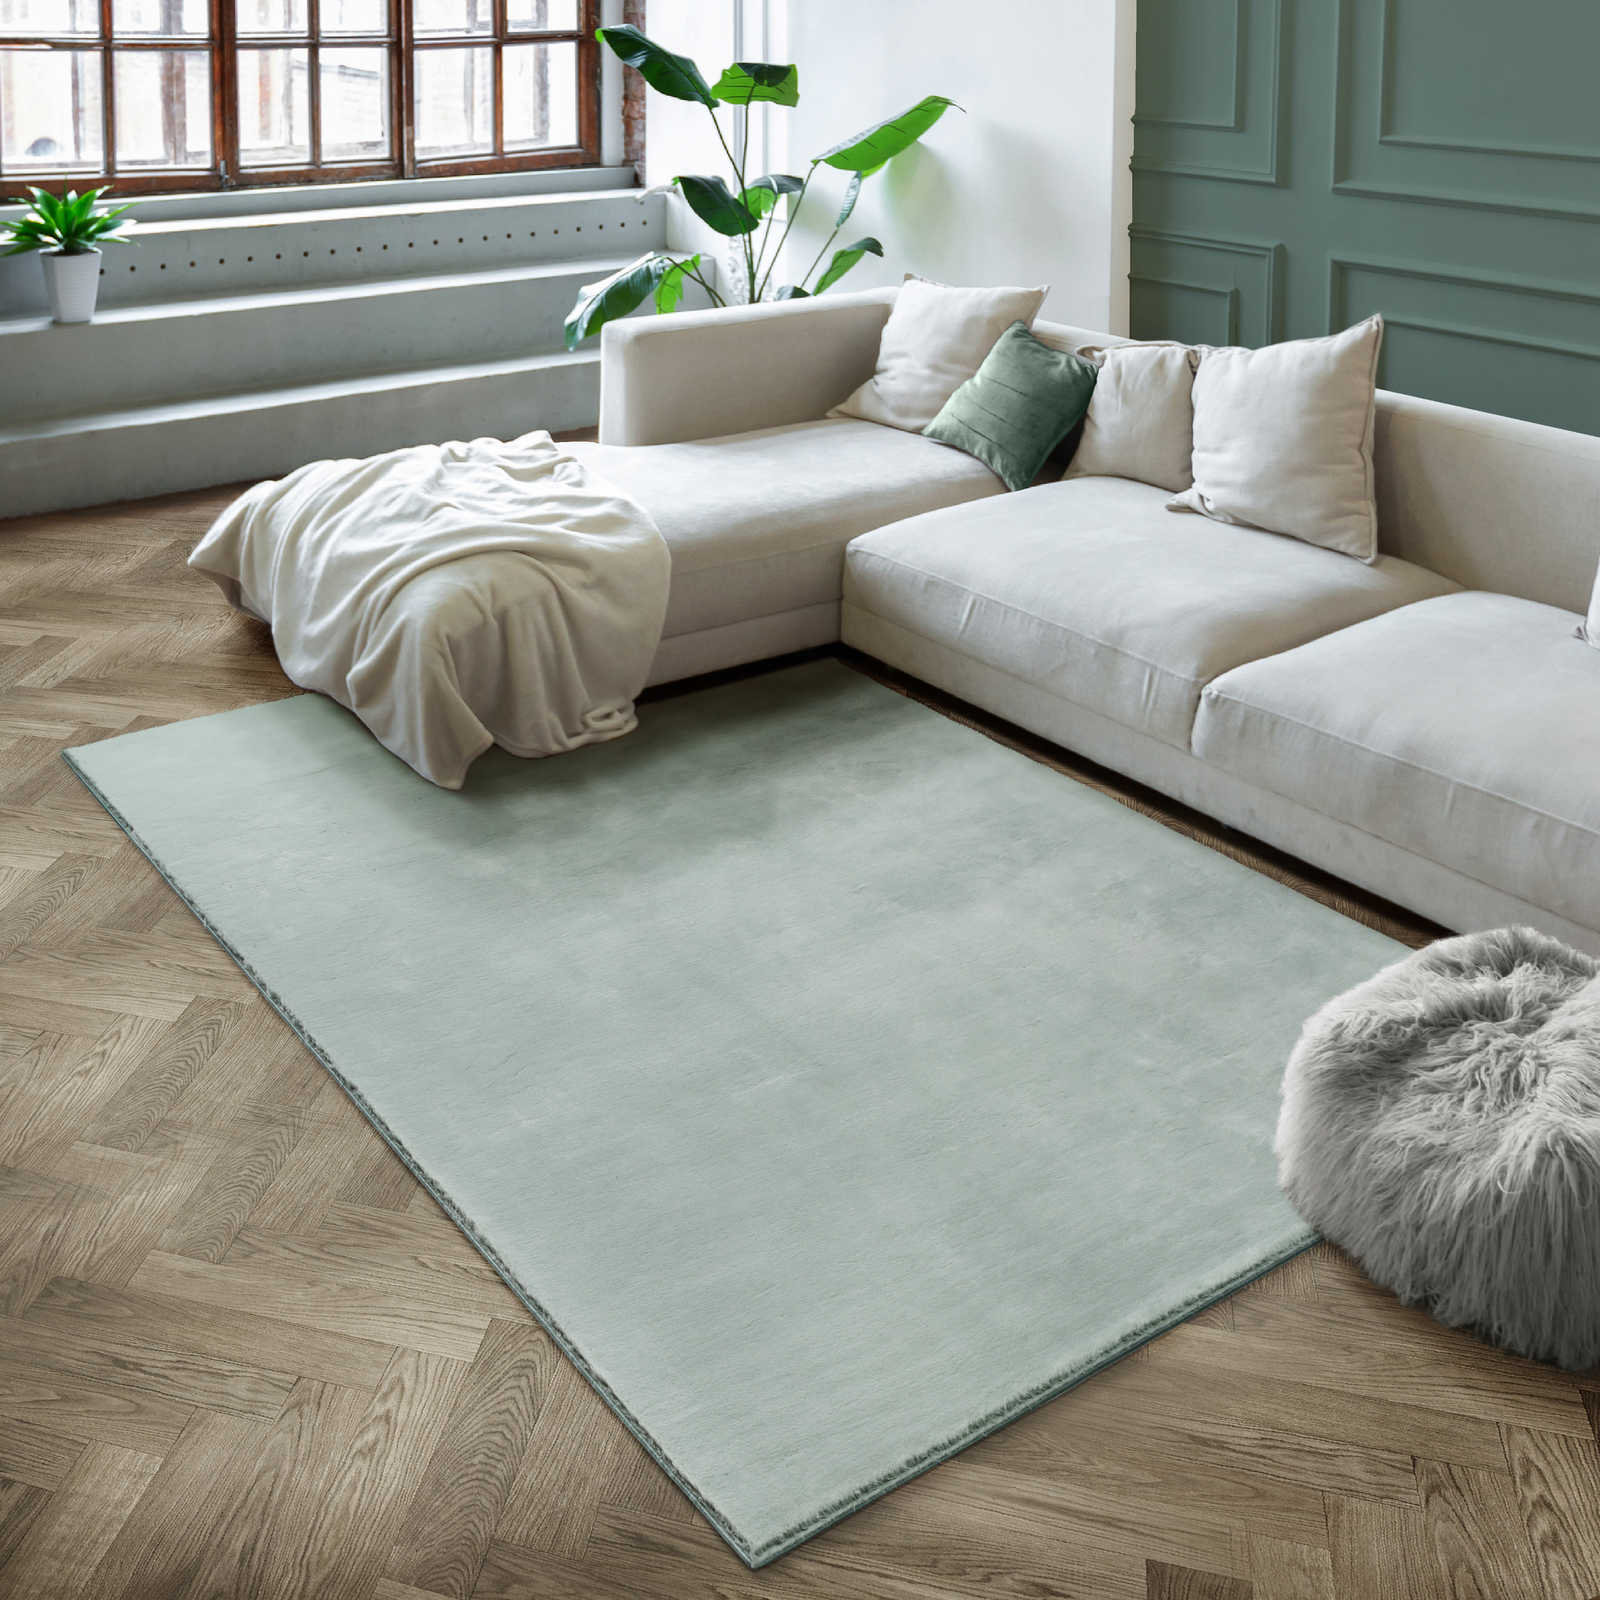 Soft high pile carpet in soft green - 110 x 60 cm
